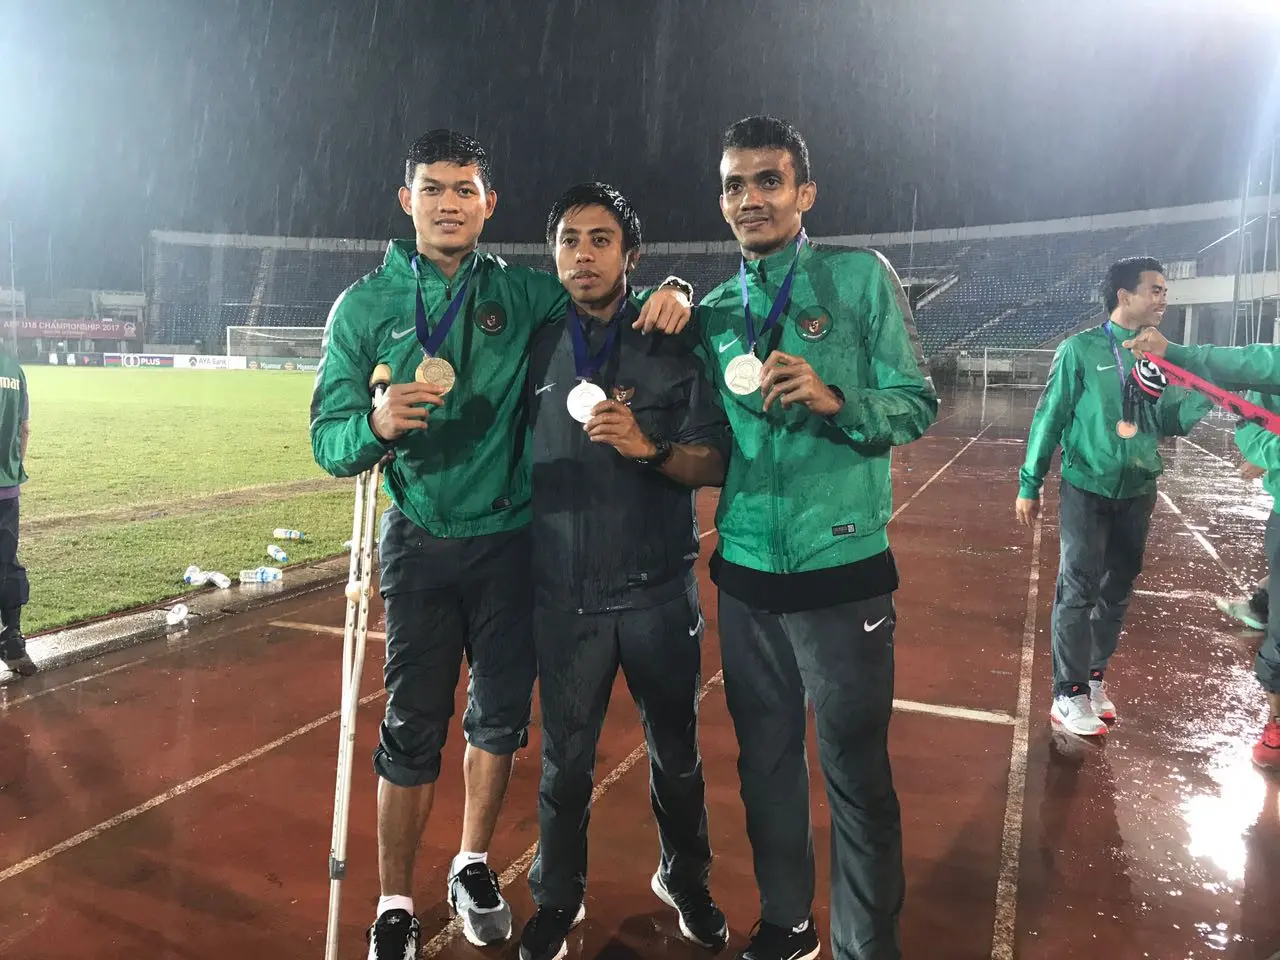 Kiper Timnas Indonesia U-19, Muhammad Riyandi, foto dengan medali perunggu di tengah guyuran hujan di Stadion Thuwunna, Yangon, Minggu (17/9/2017). (Bola.com/Aning Jati)